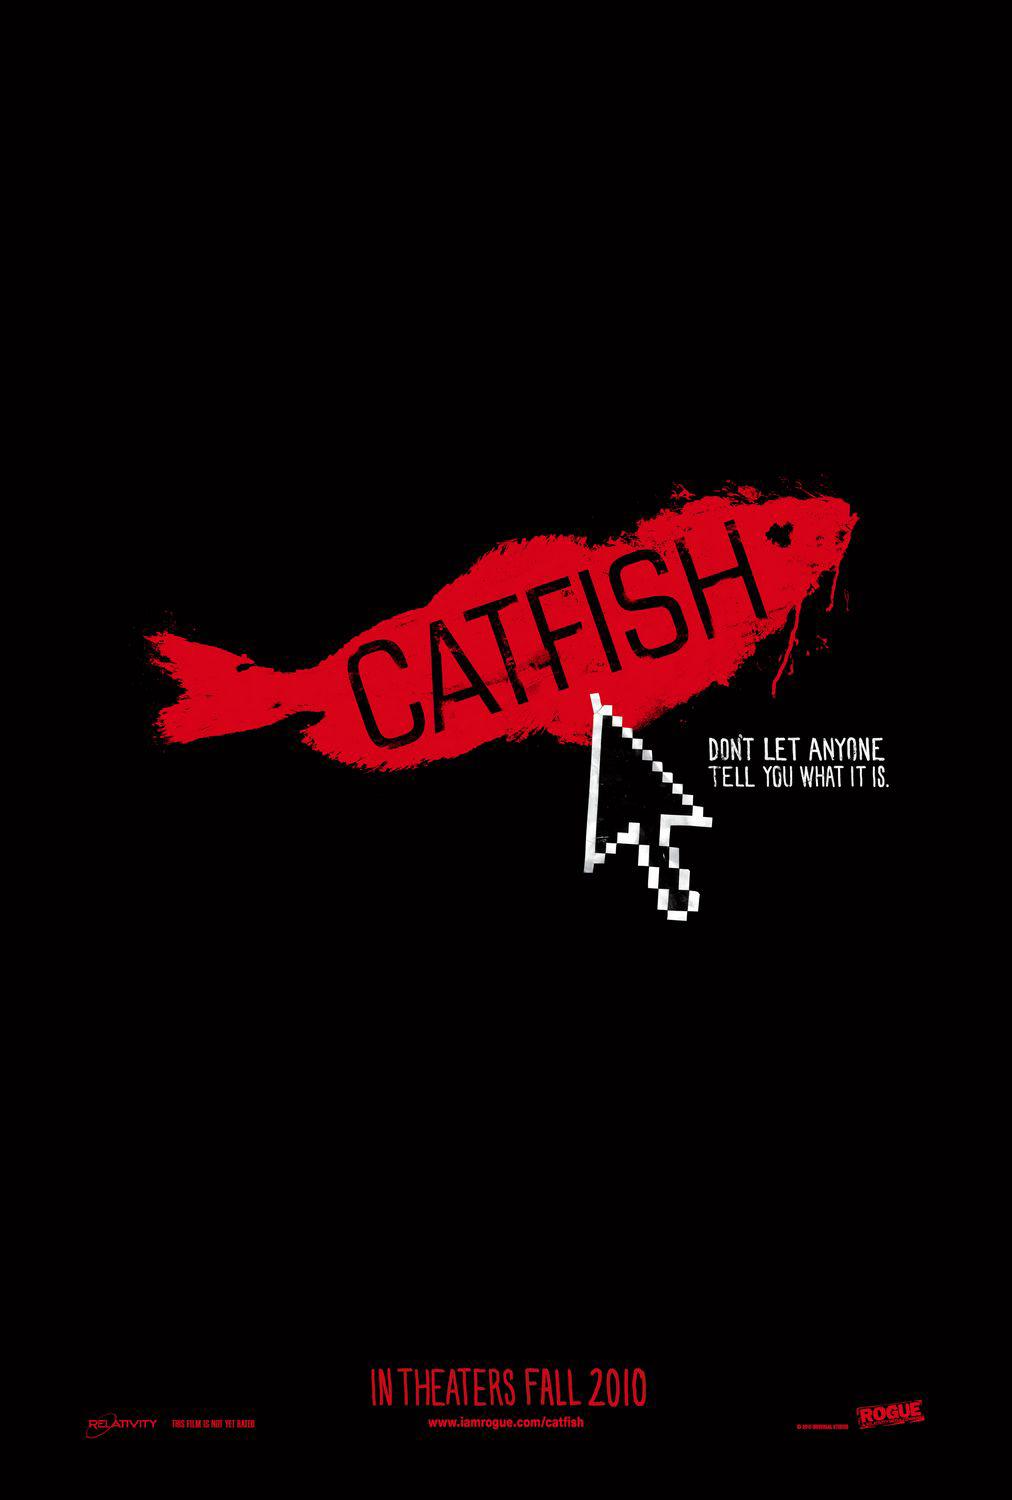 Nonton film Catfish layarkaca21 indoxx1 ganool online streaming terbaru